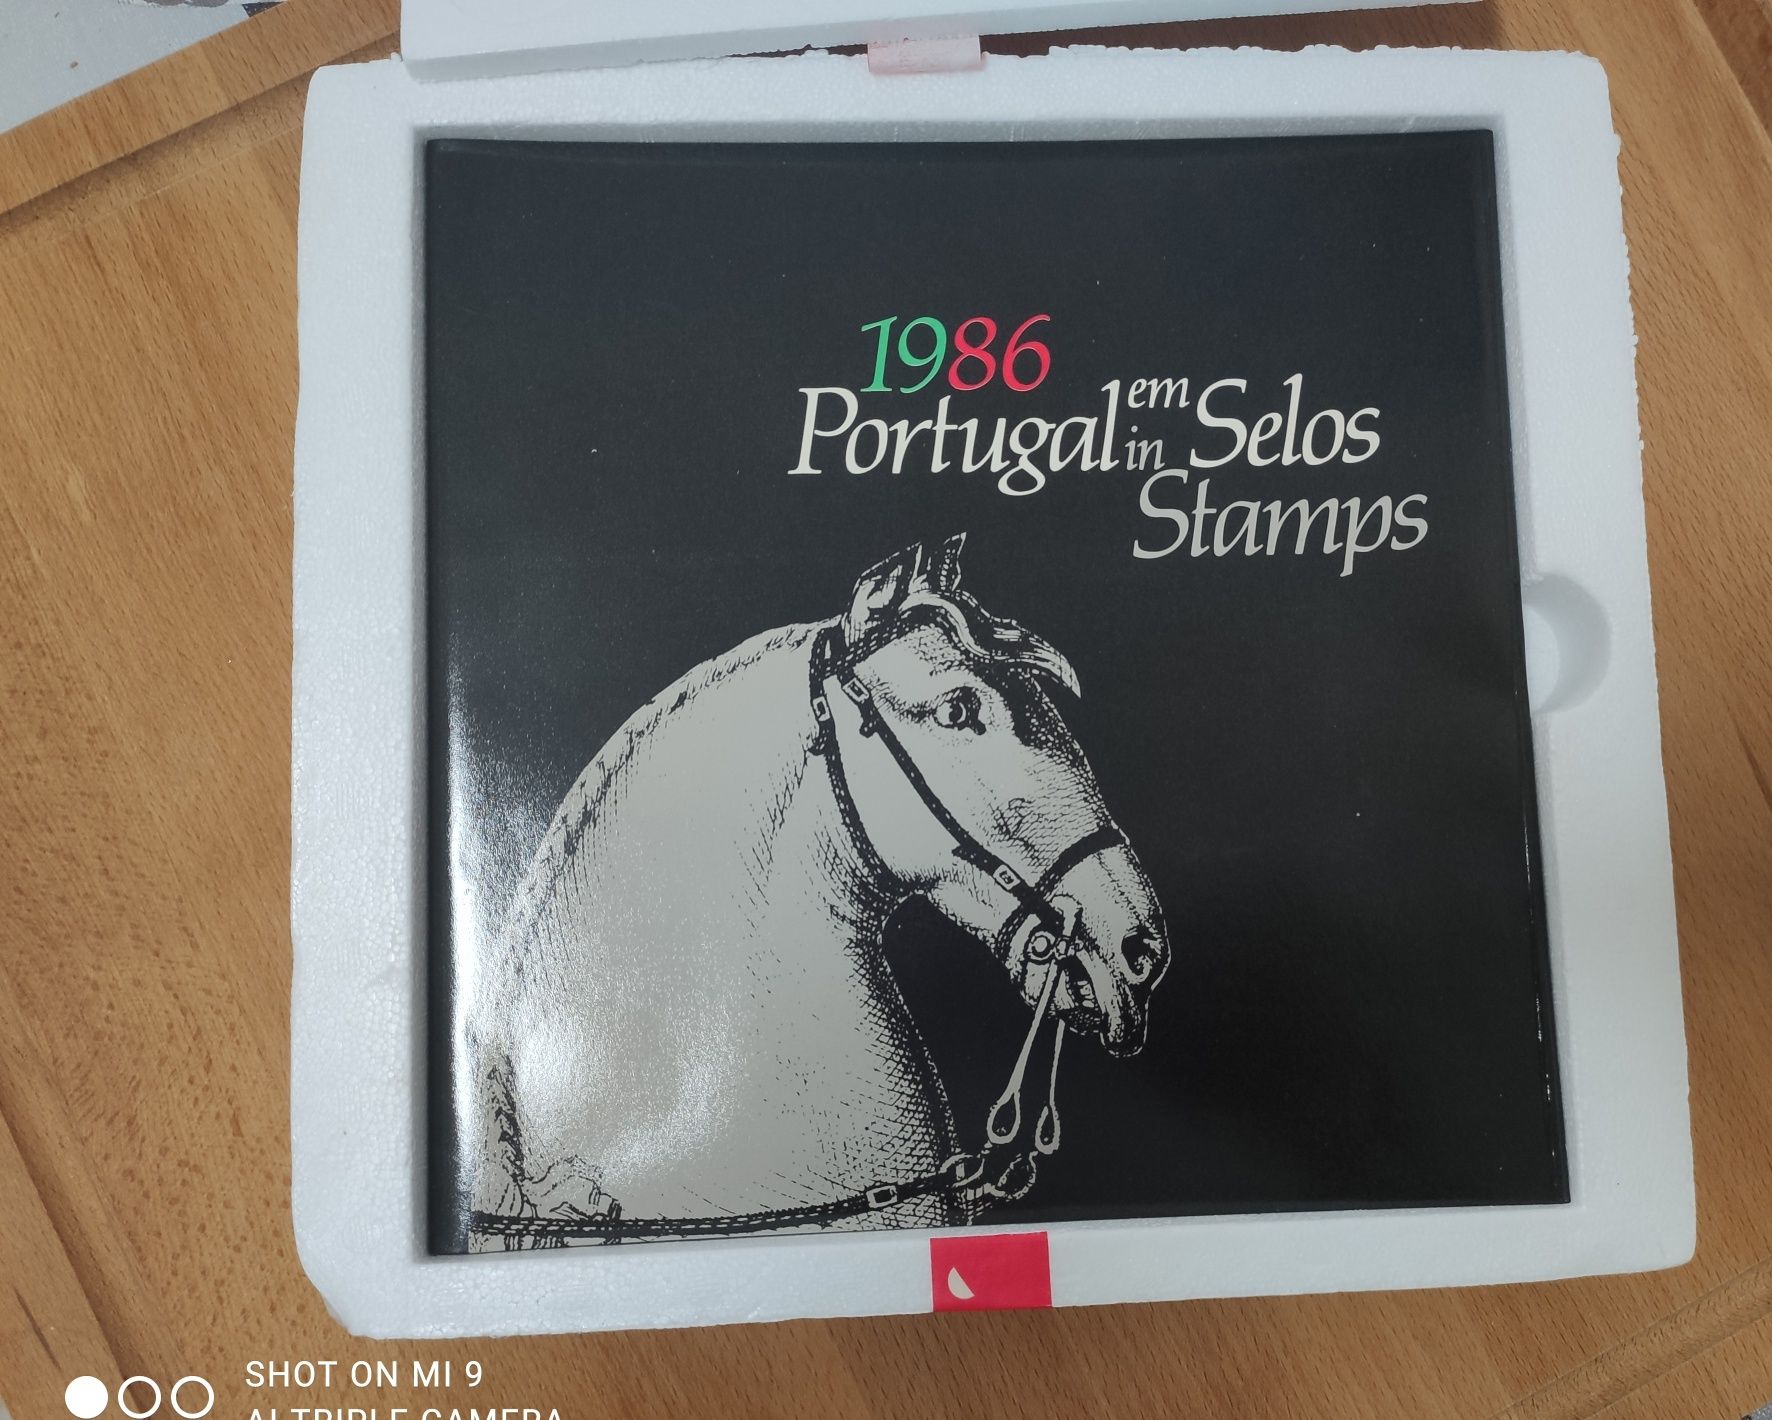 Portugal em selos 1986